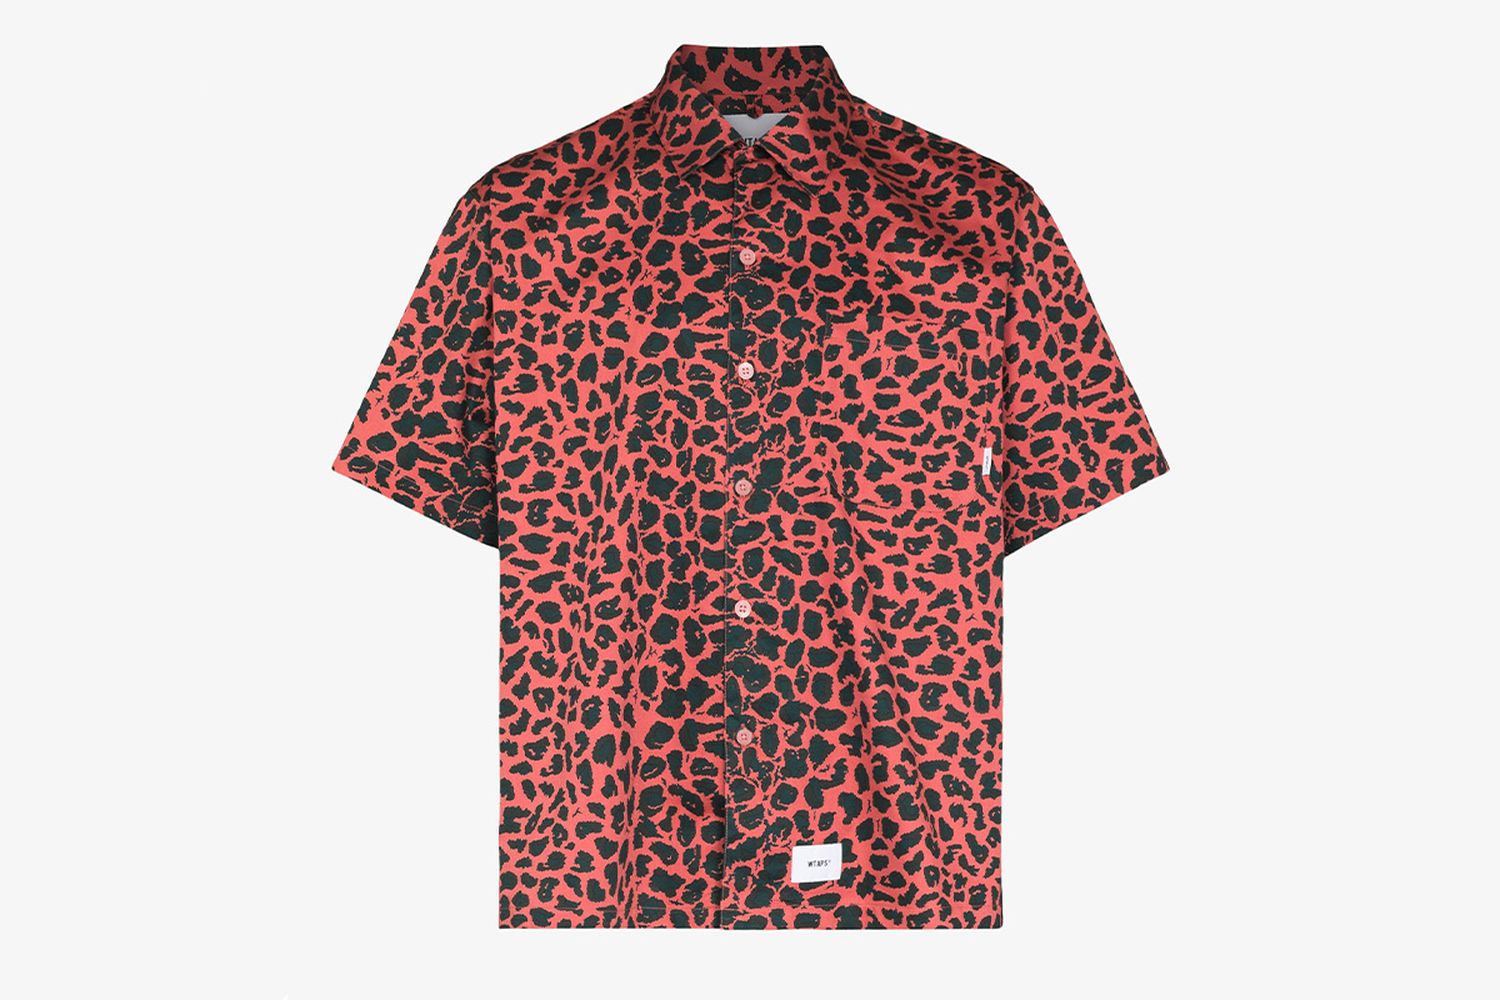 Night Vision Leopard Print Shirt